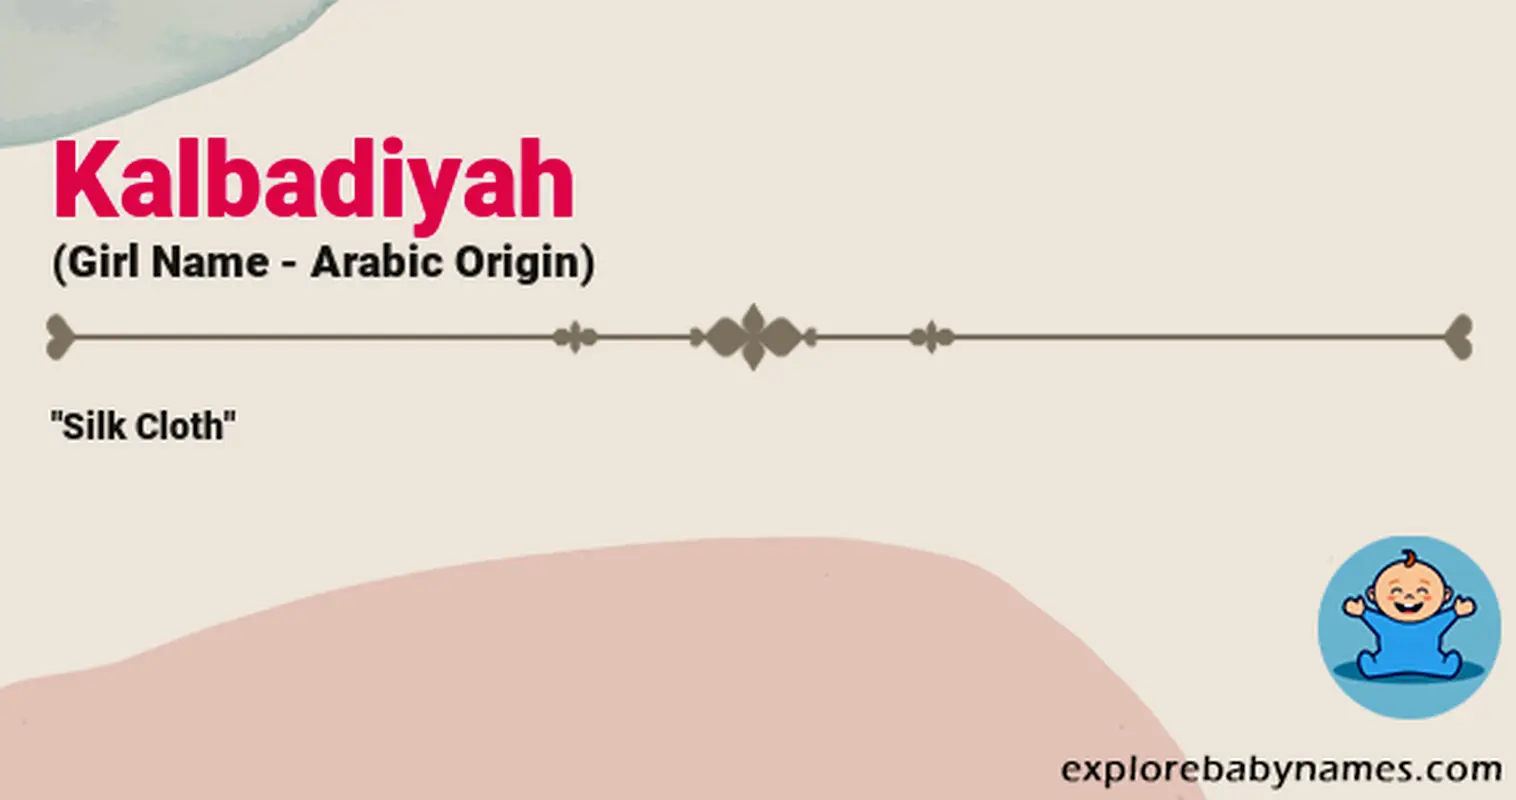 Meaning of Kalbadiyah